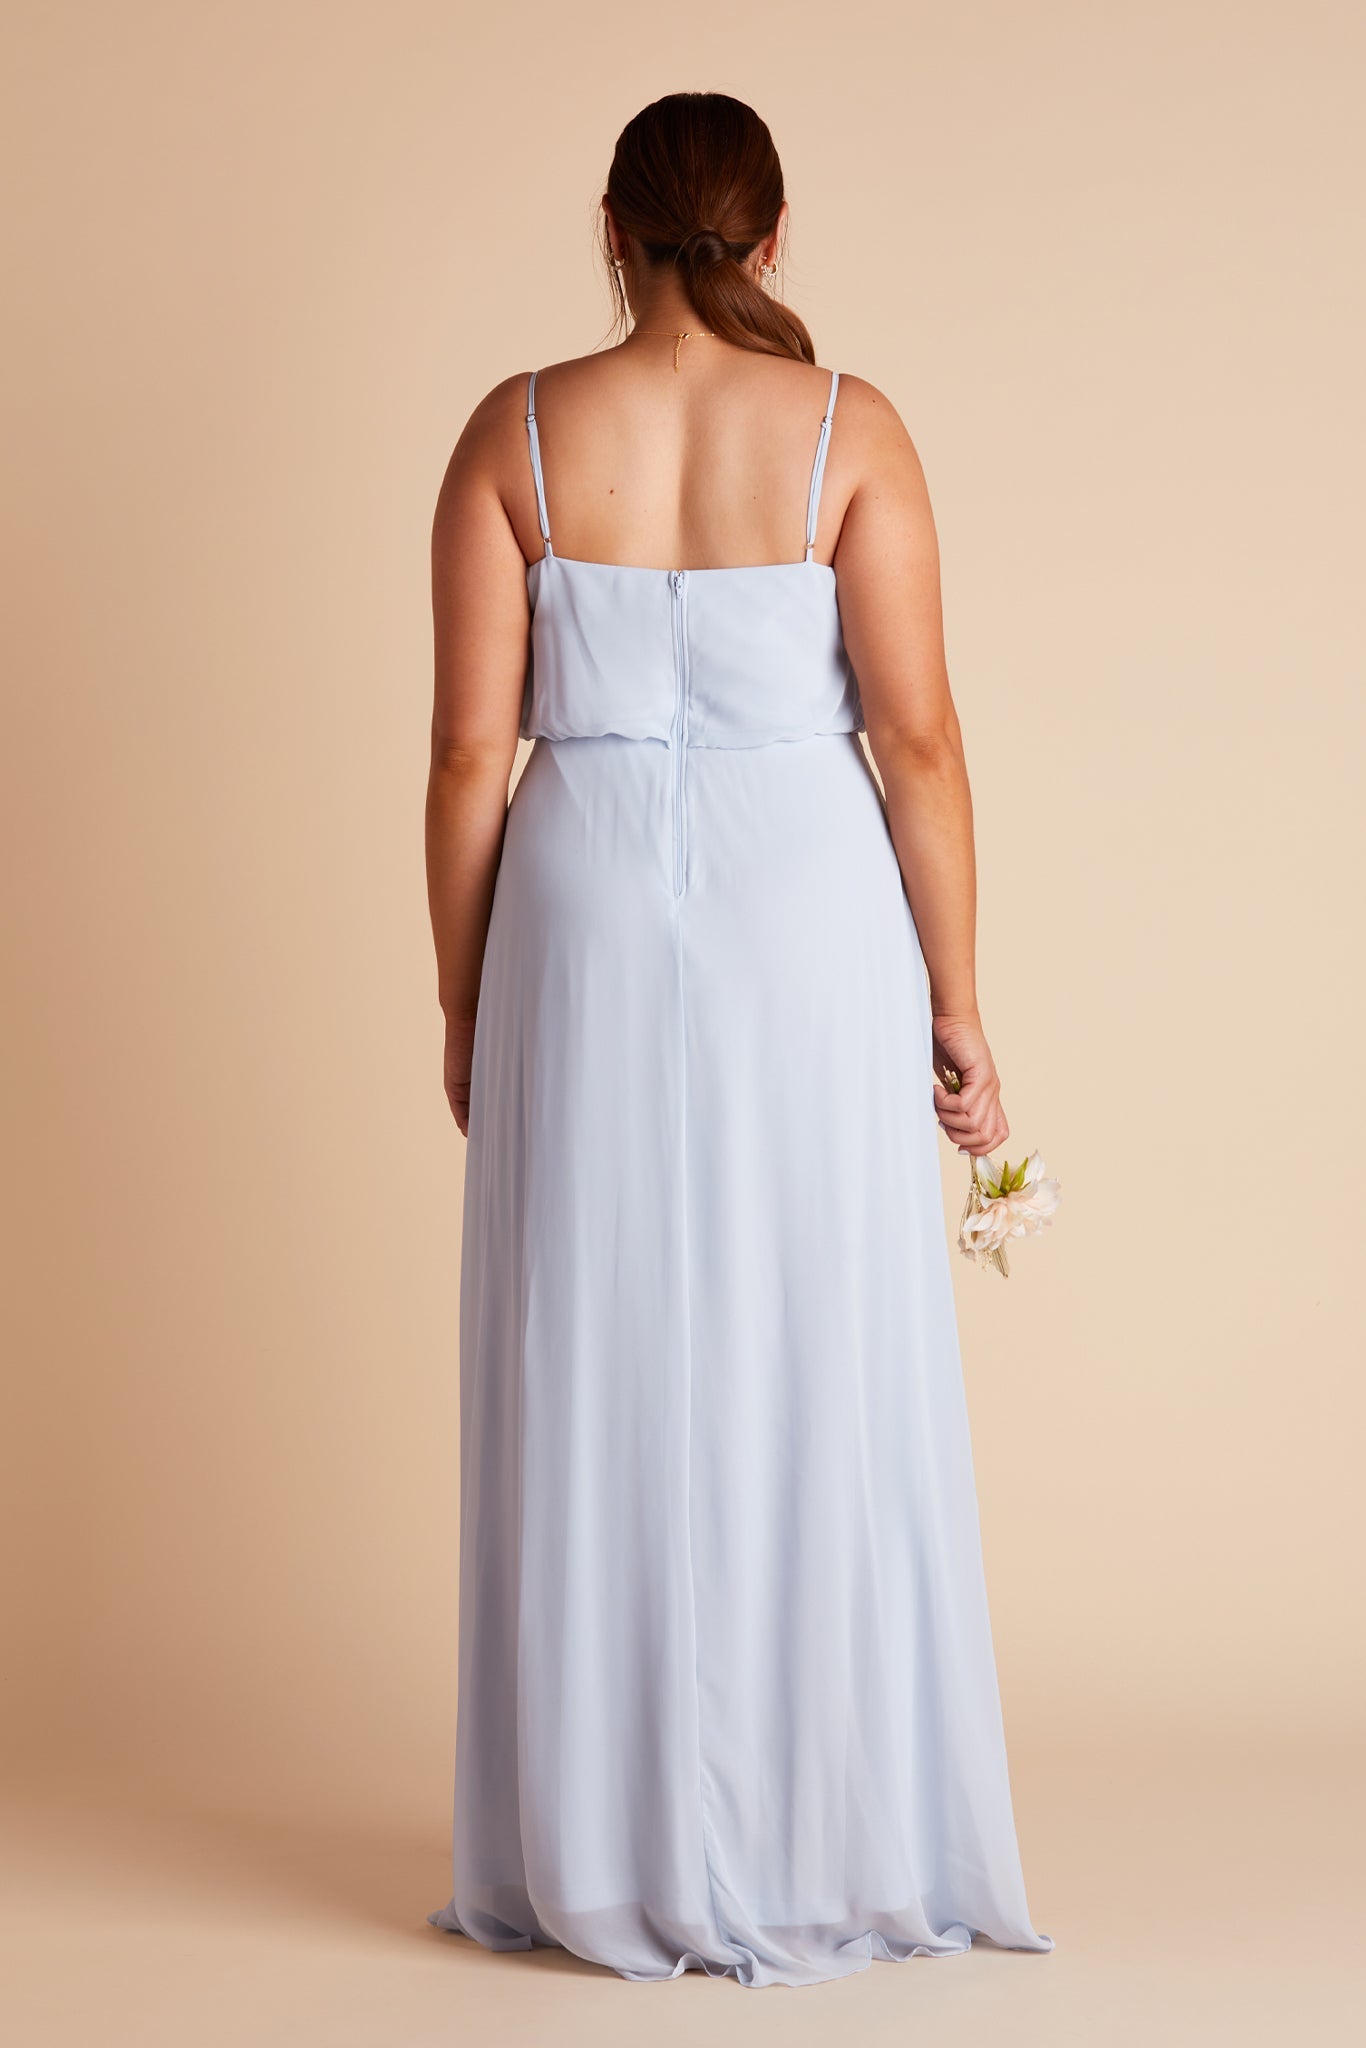 Gwennie plus size bridesmaid dress with slit in ice blue chiffon by Birdy Grey, back view